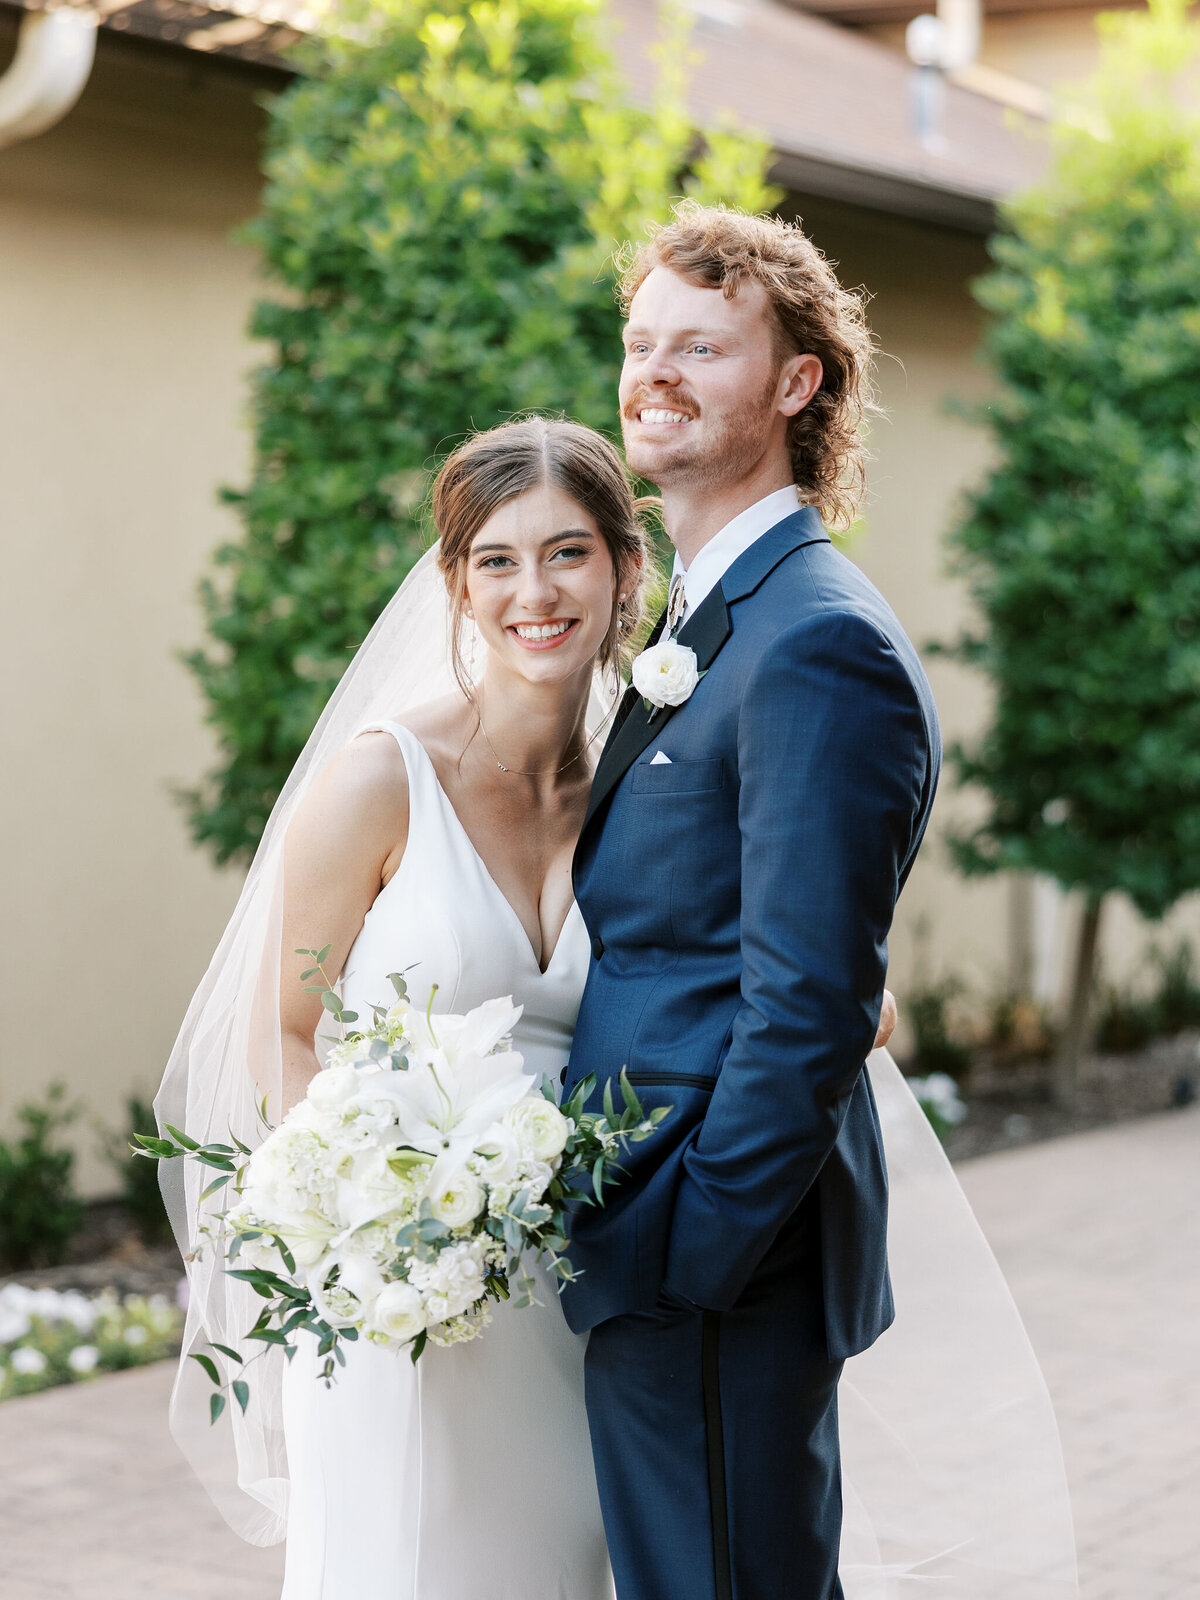 Katherine&Connor|WeddingSneaks-90